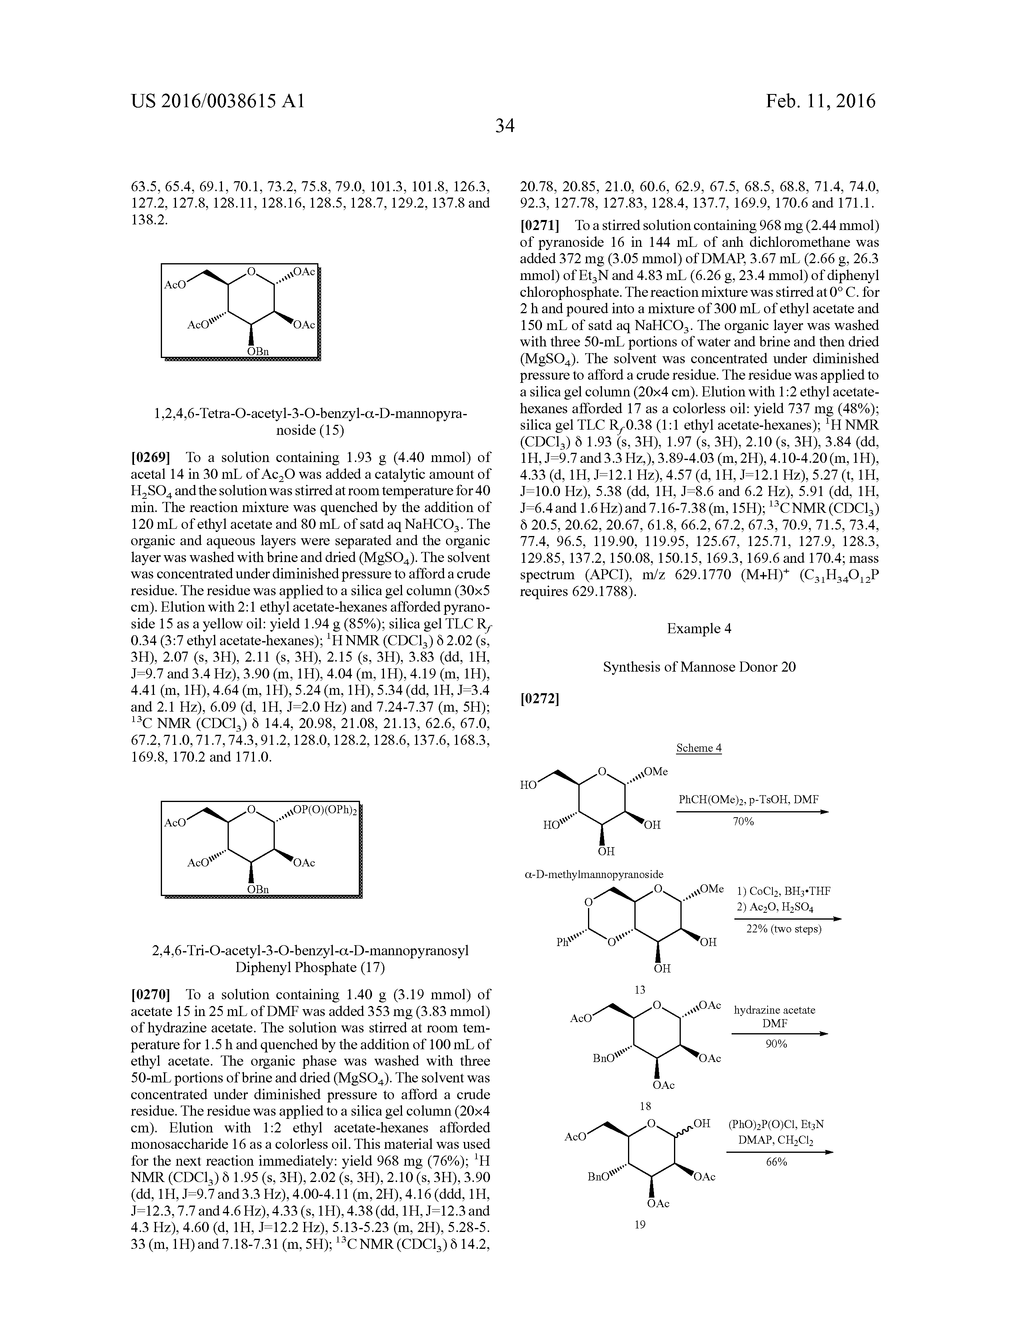 SACCHARIDE CONJUGATES - diagram, schematic, and image 47